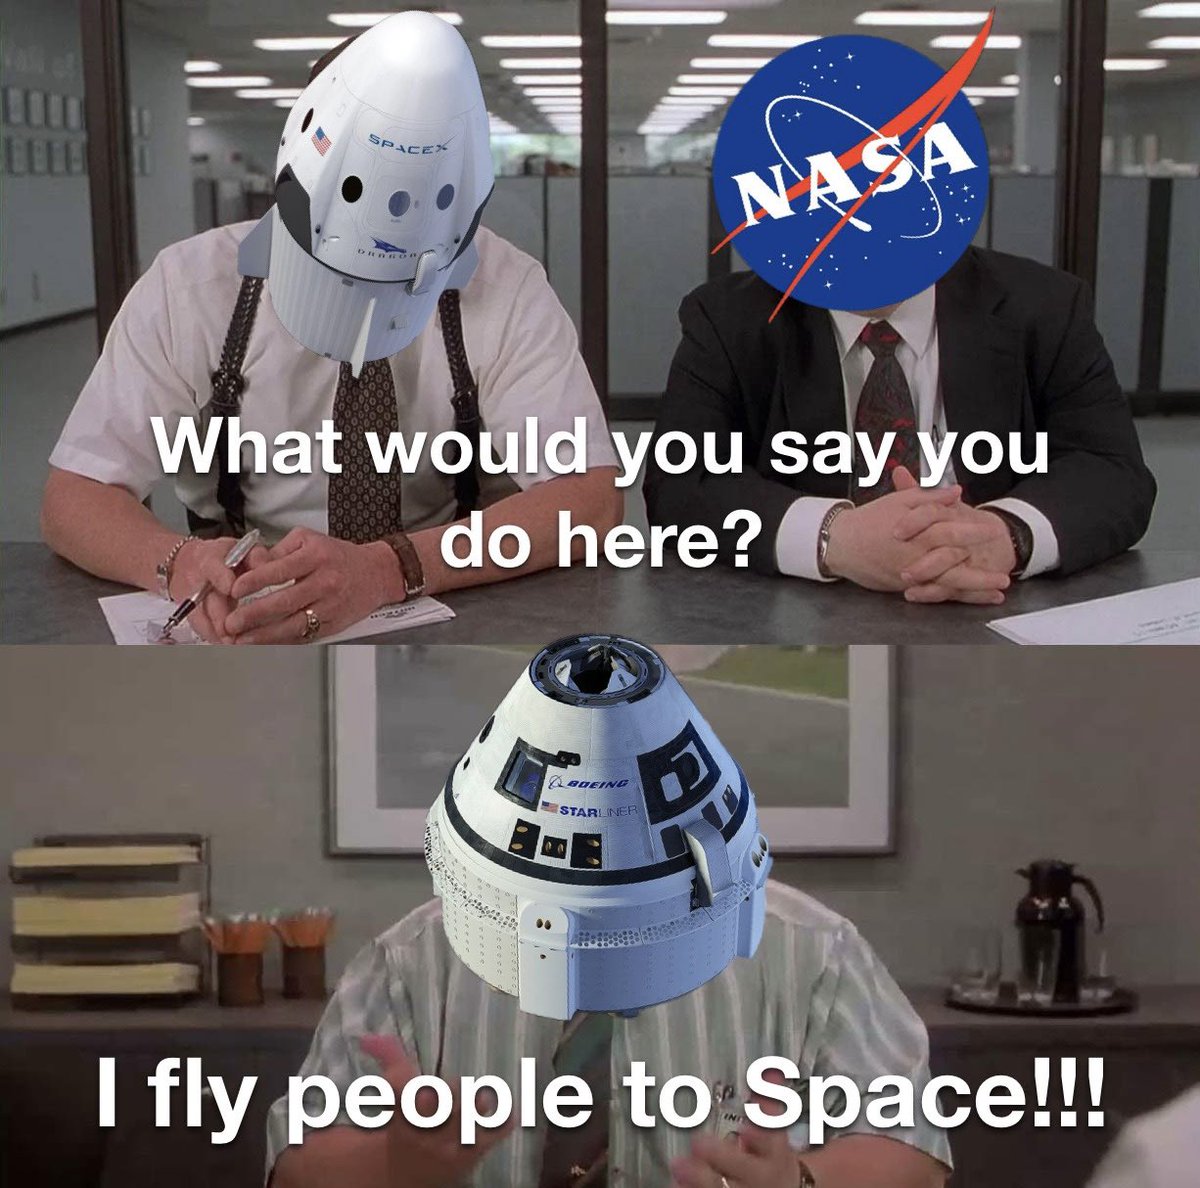 @SpaceNews_Inc